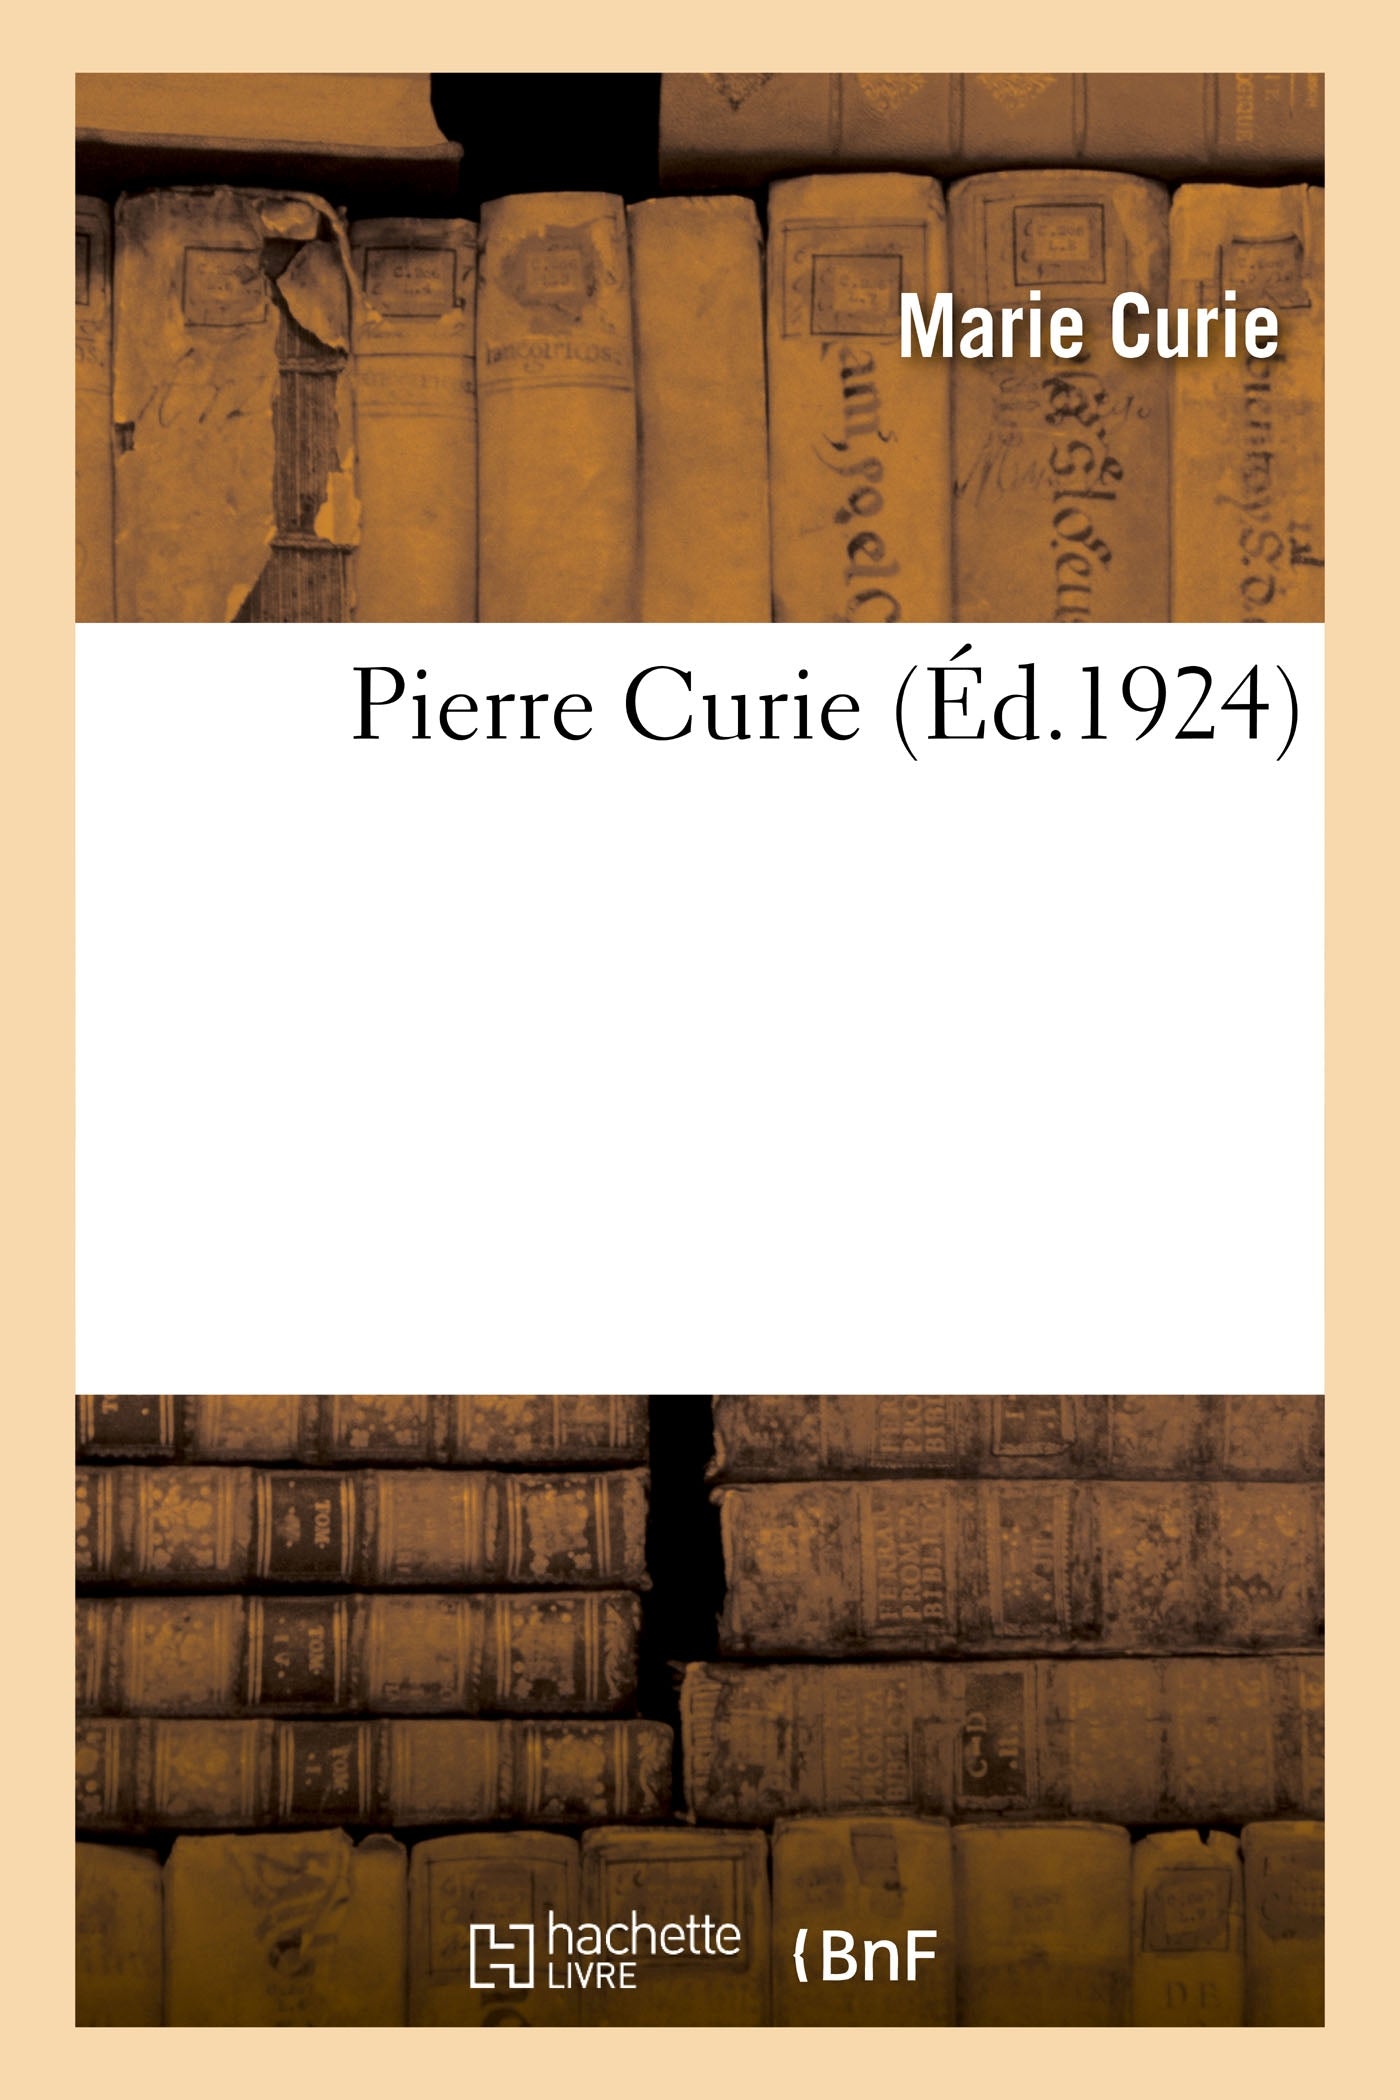 Pierre Curie - Scientific Curiosity